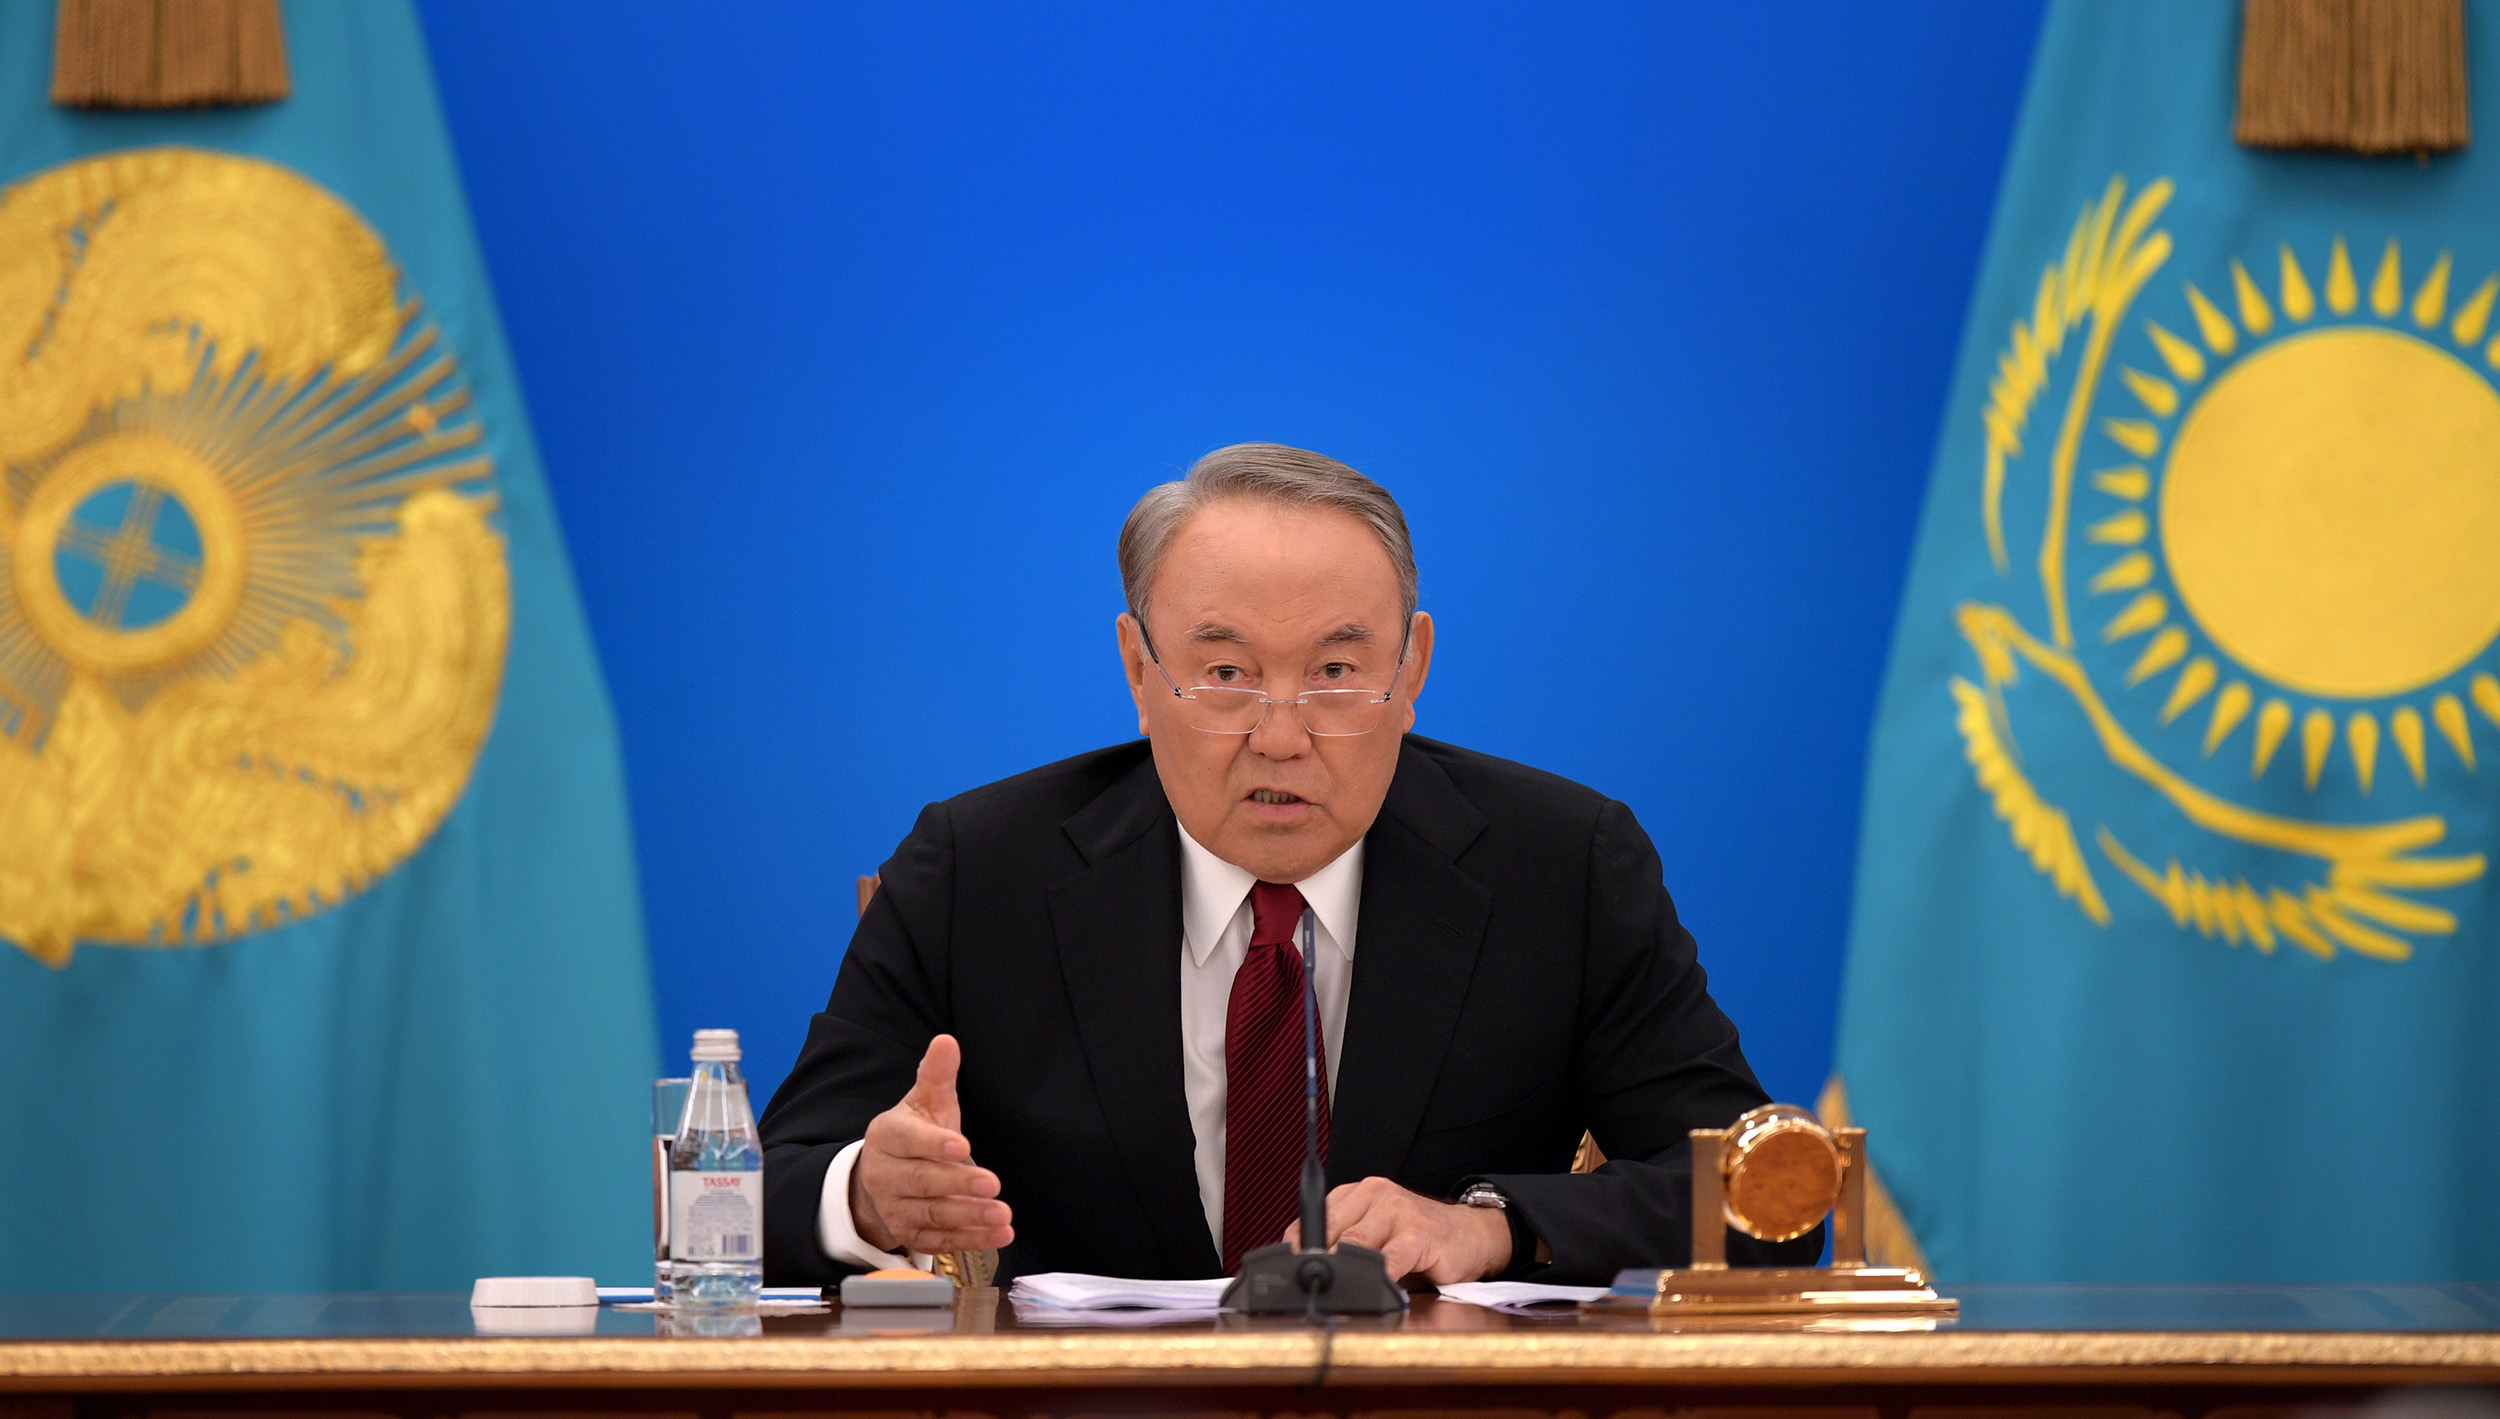 Послание Президента Республики Казахстан Н.Назарбаева народу Казахстана. 5 октября 2018 г